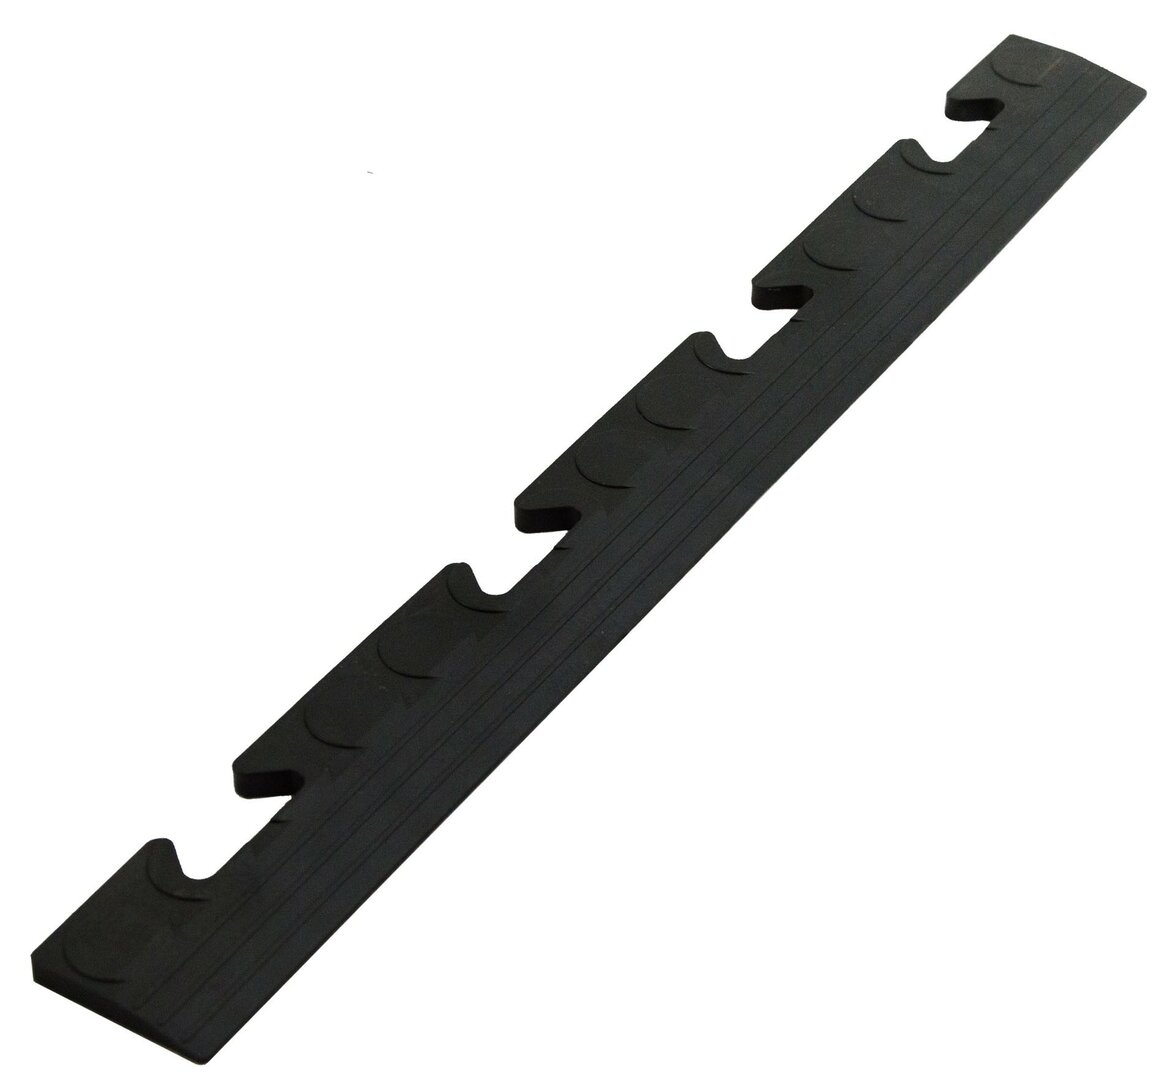 Černý PVC vinylový nájezd "samice" pro dlaždice Tenax (bubbles) - délka 48 cm, šířka 5,1 cm a výška 0,8 cm